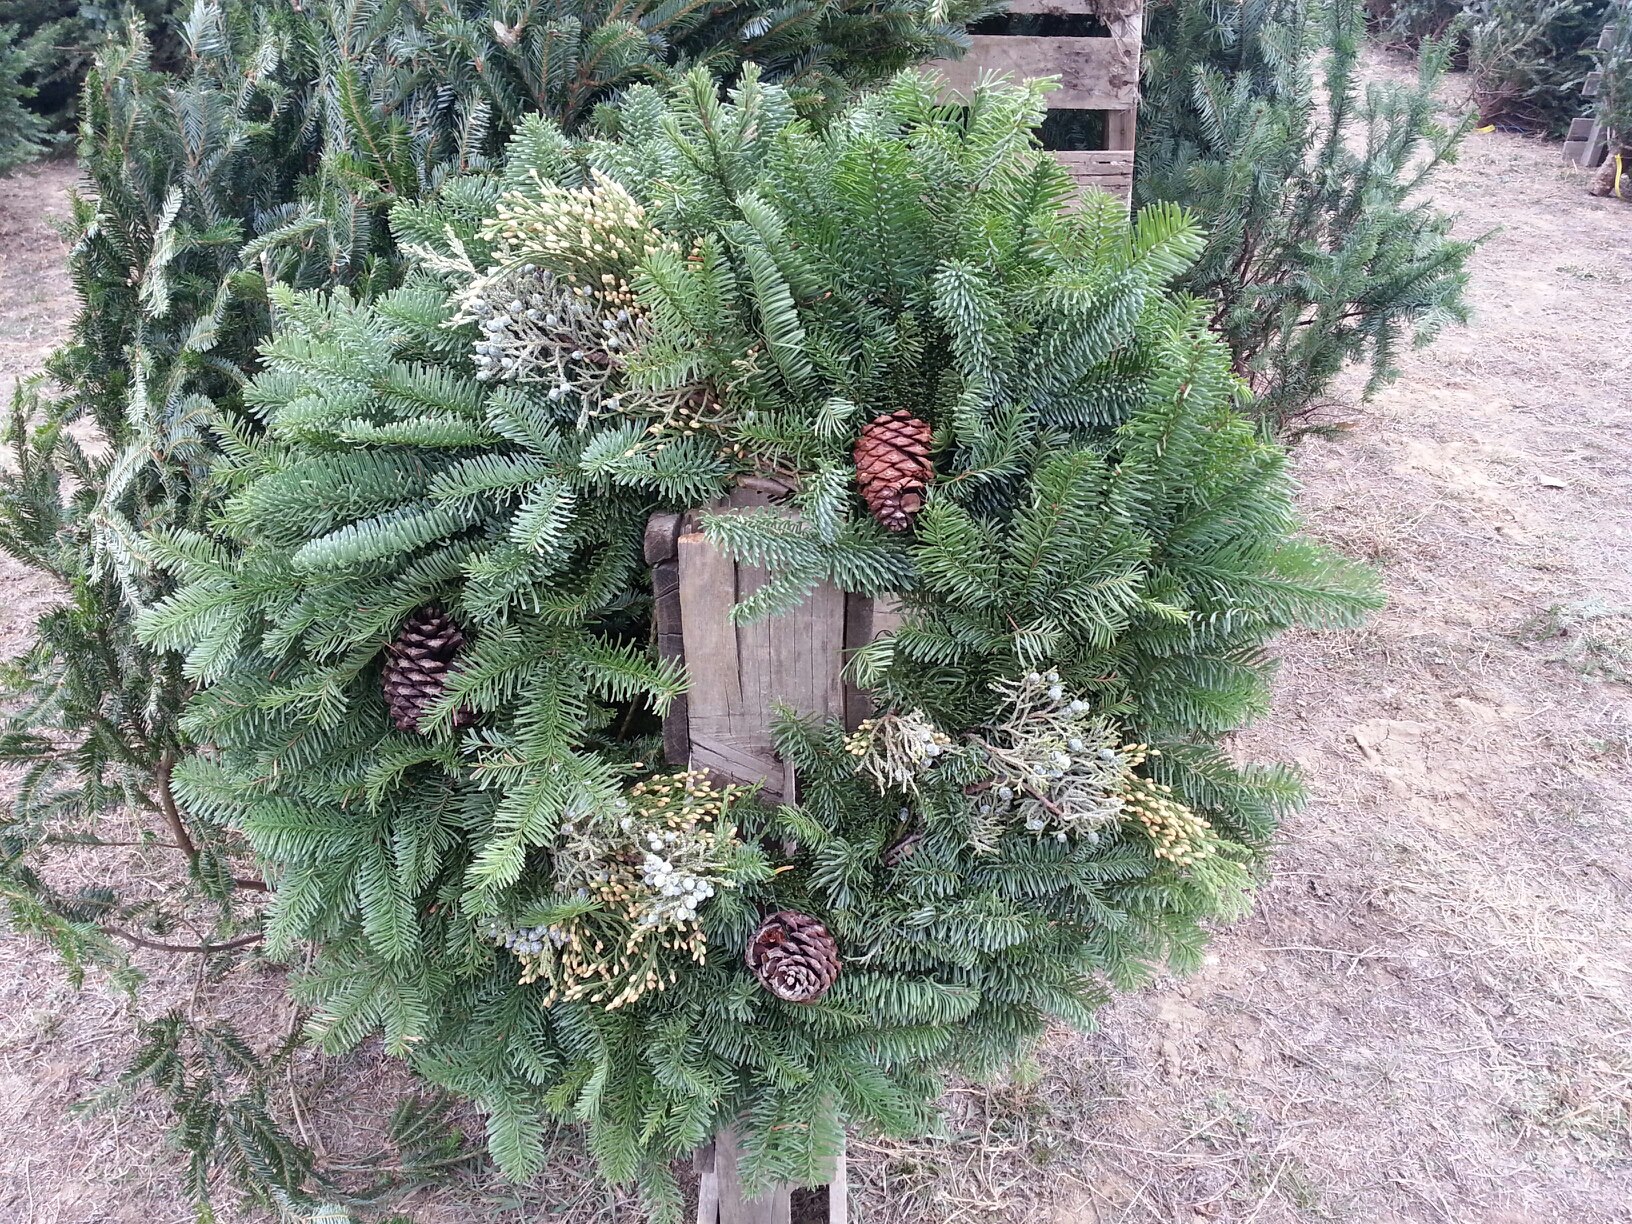 Christmas wreath on fence post